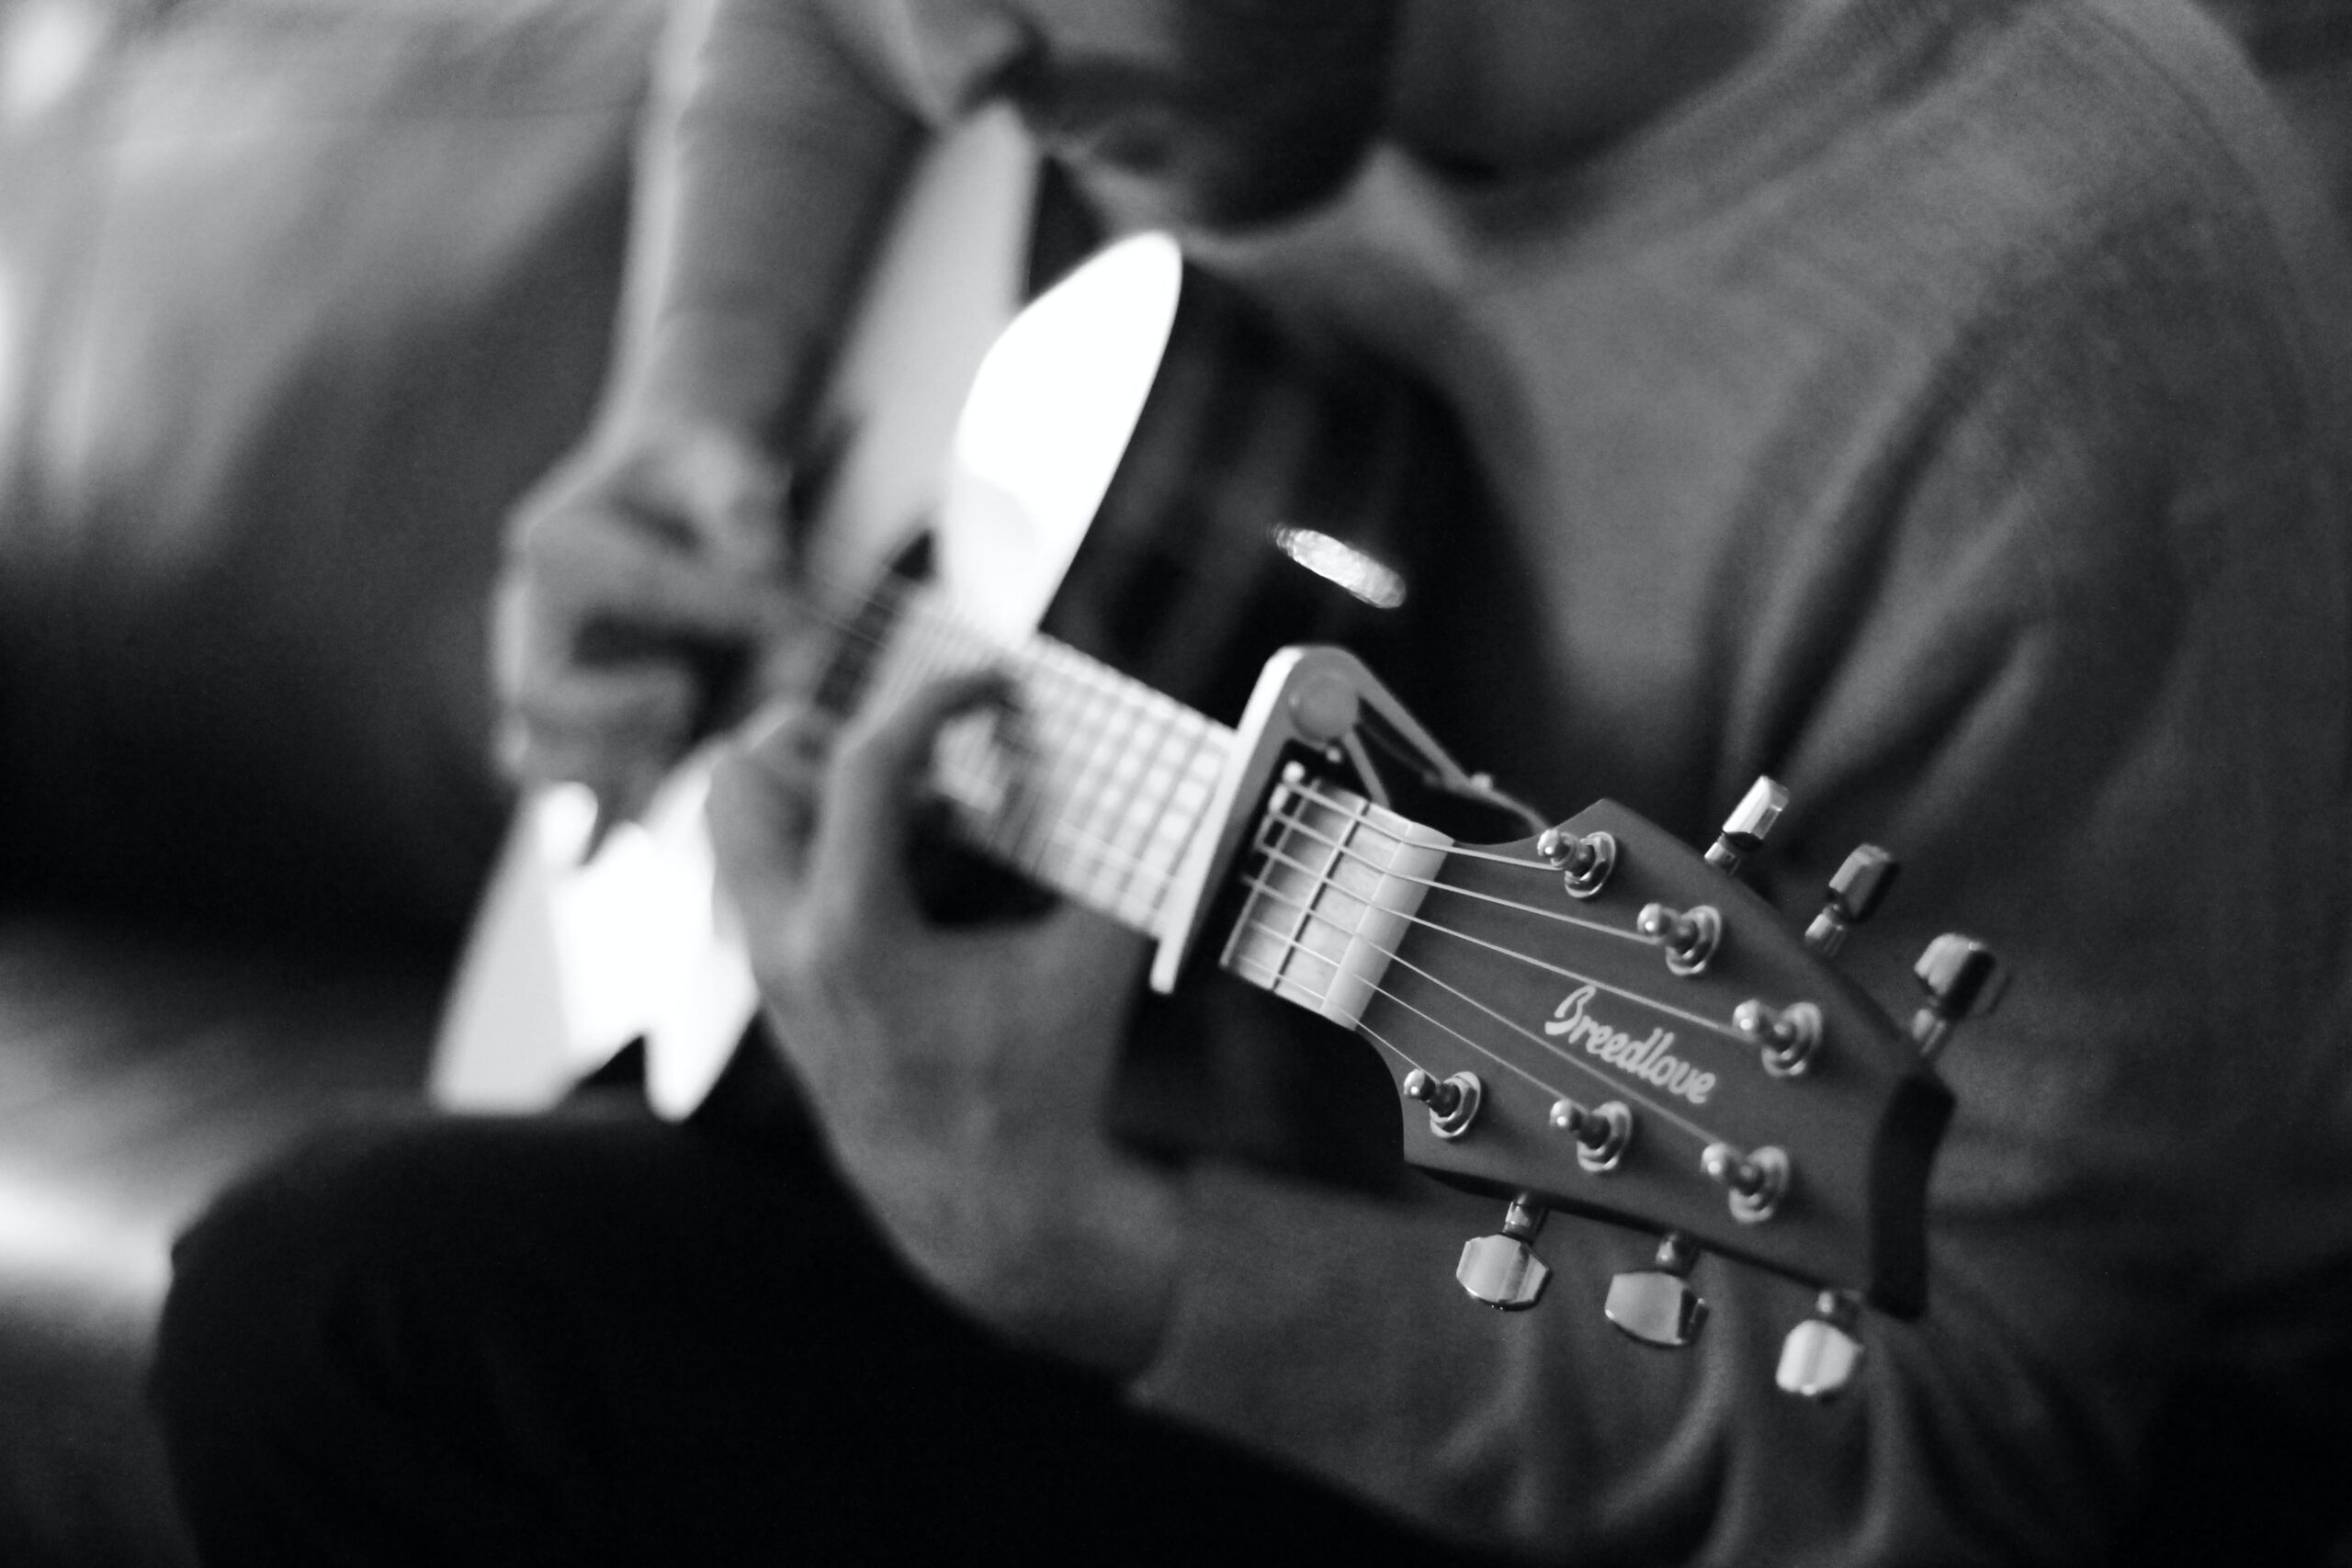 Man playing acoustic guitar